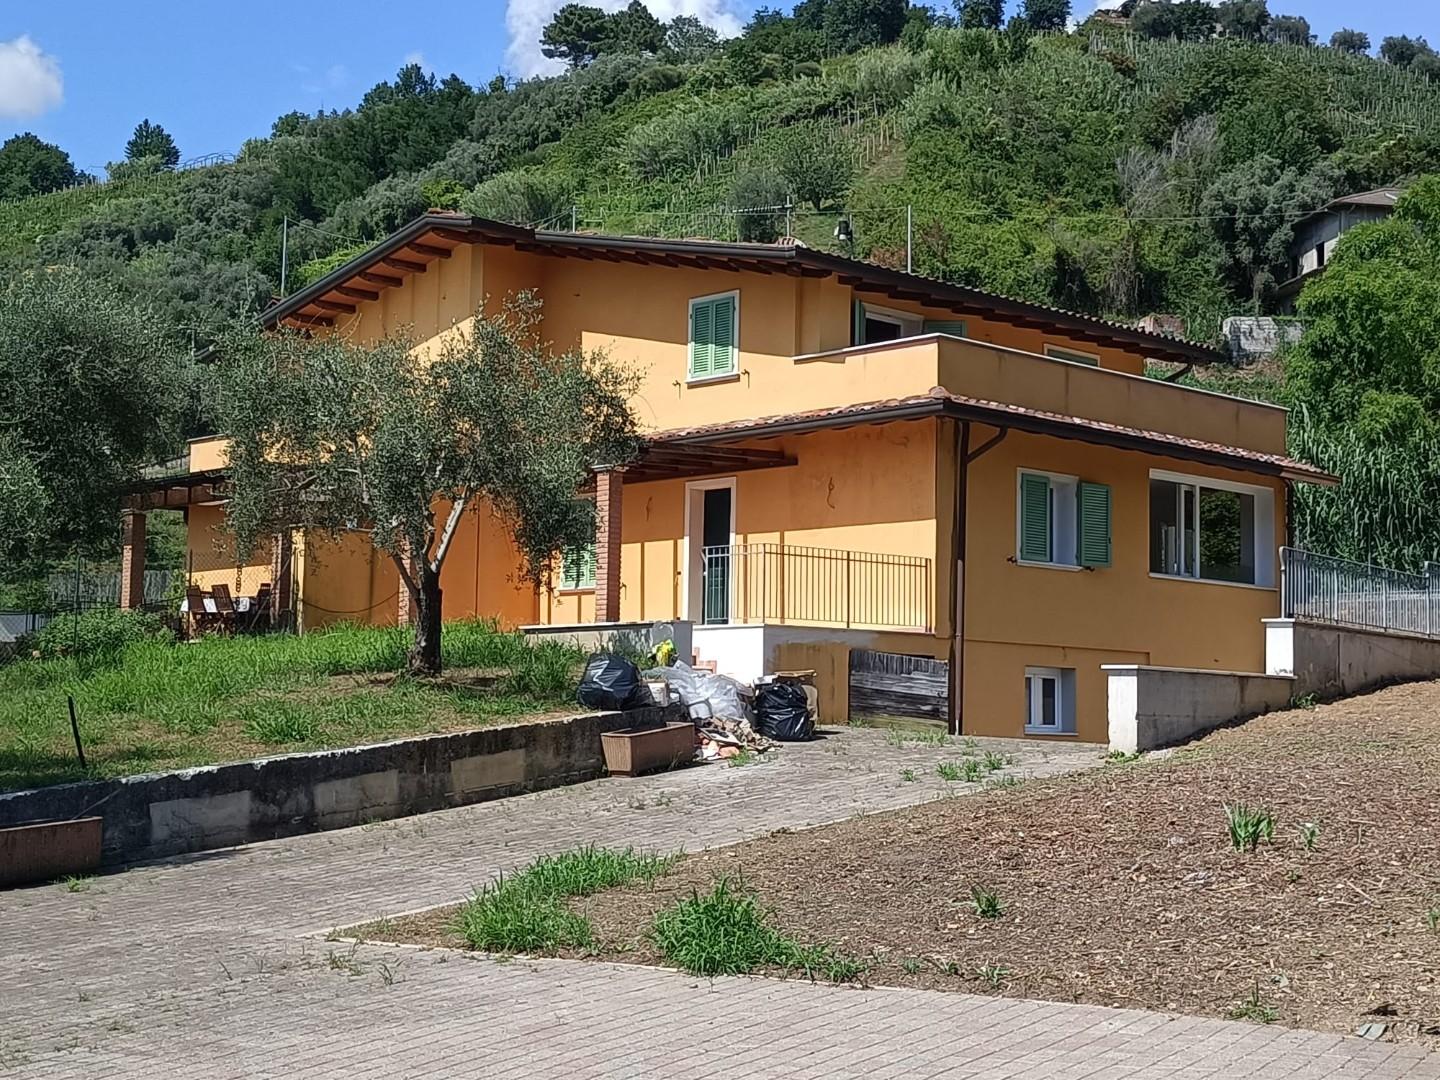 Villa Bifamiliare con giardino, Carrara bonascola